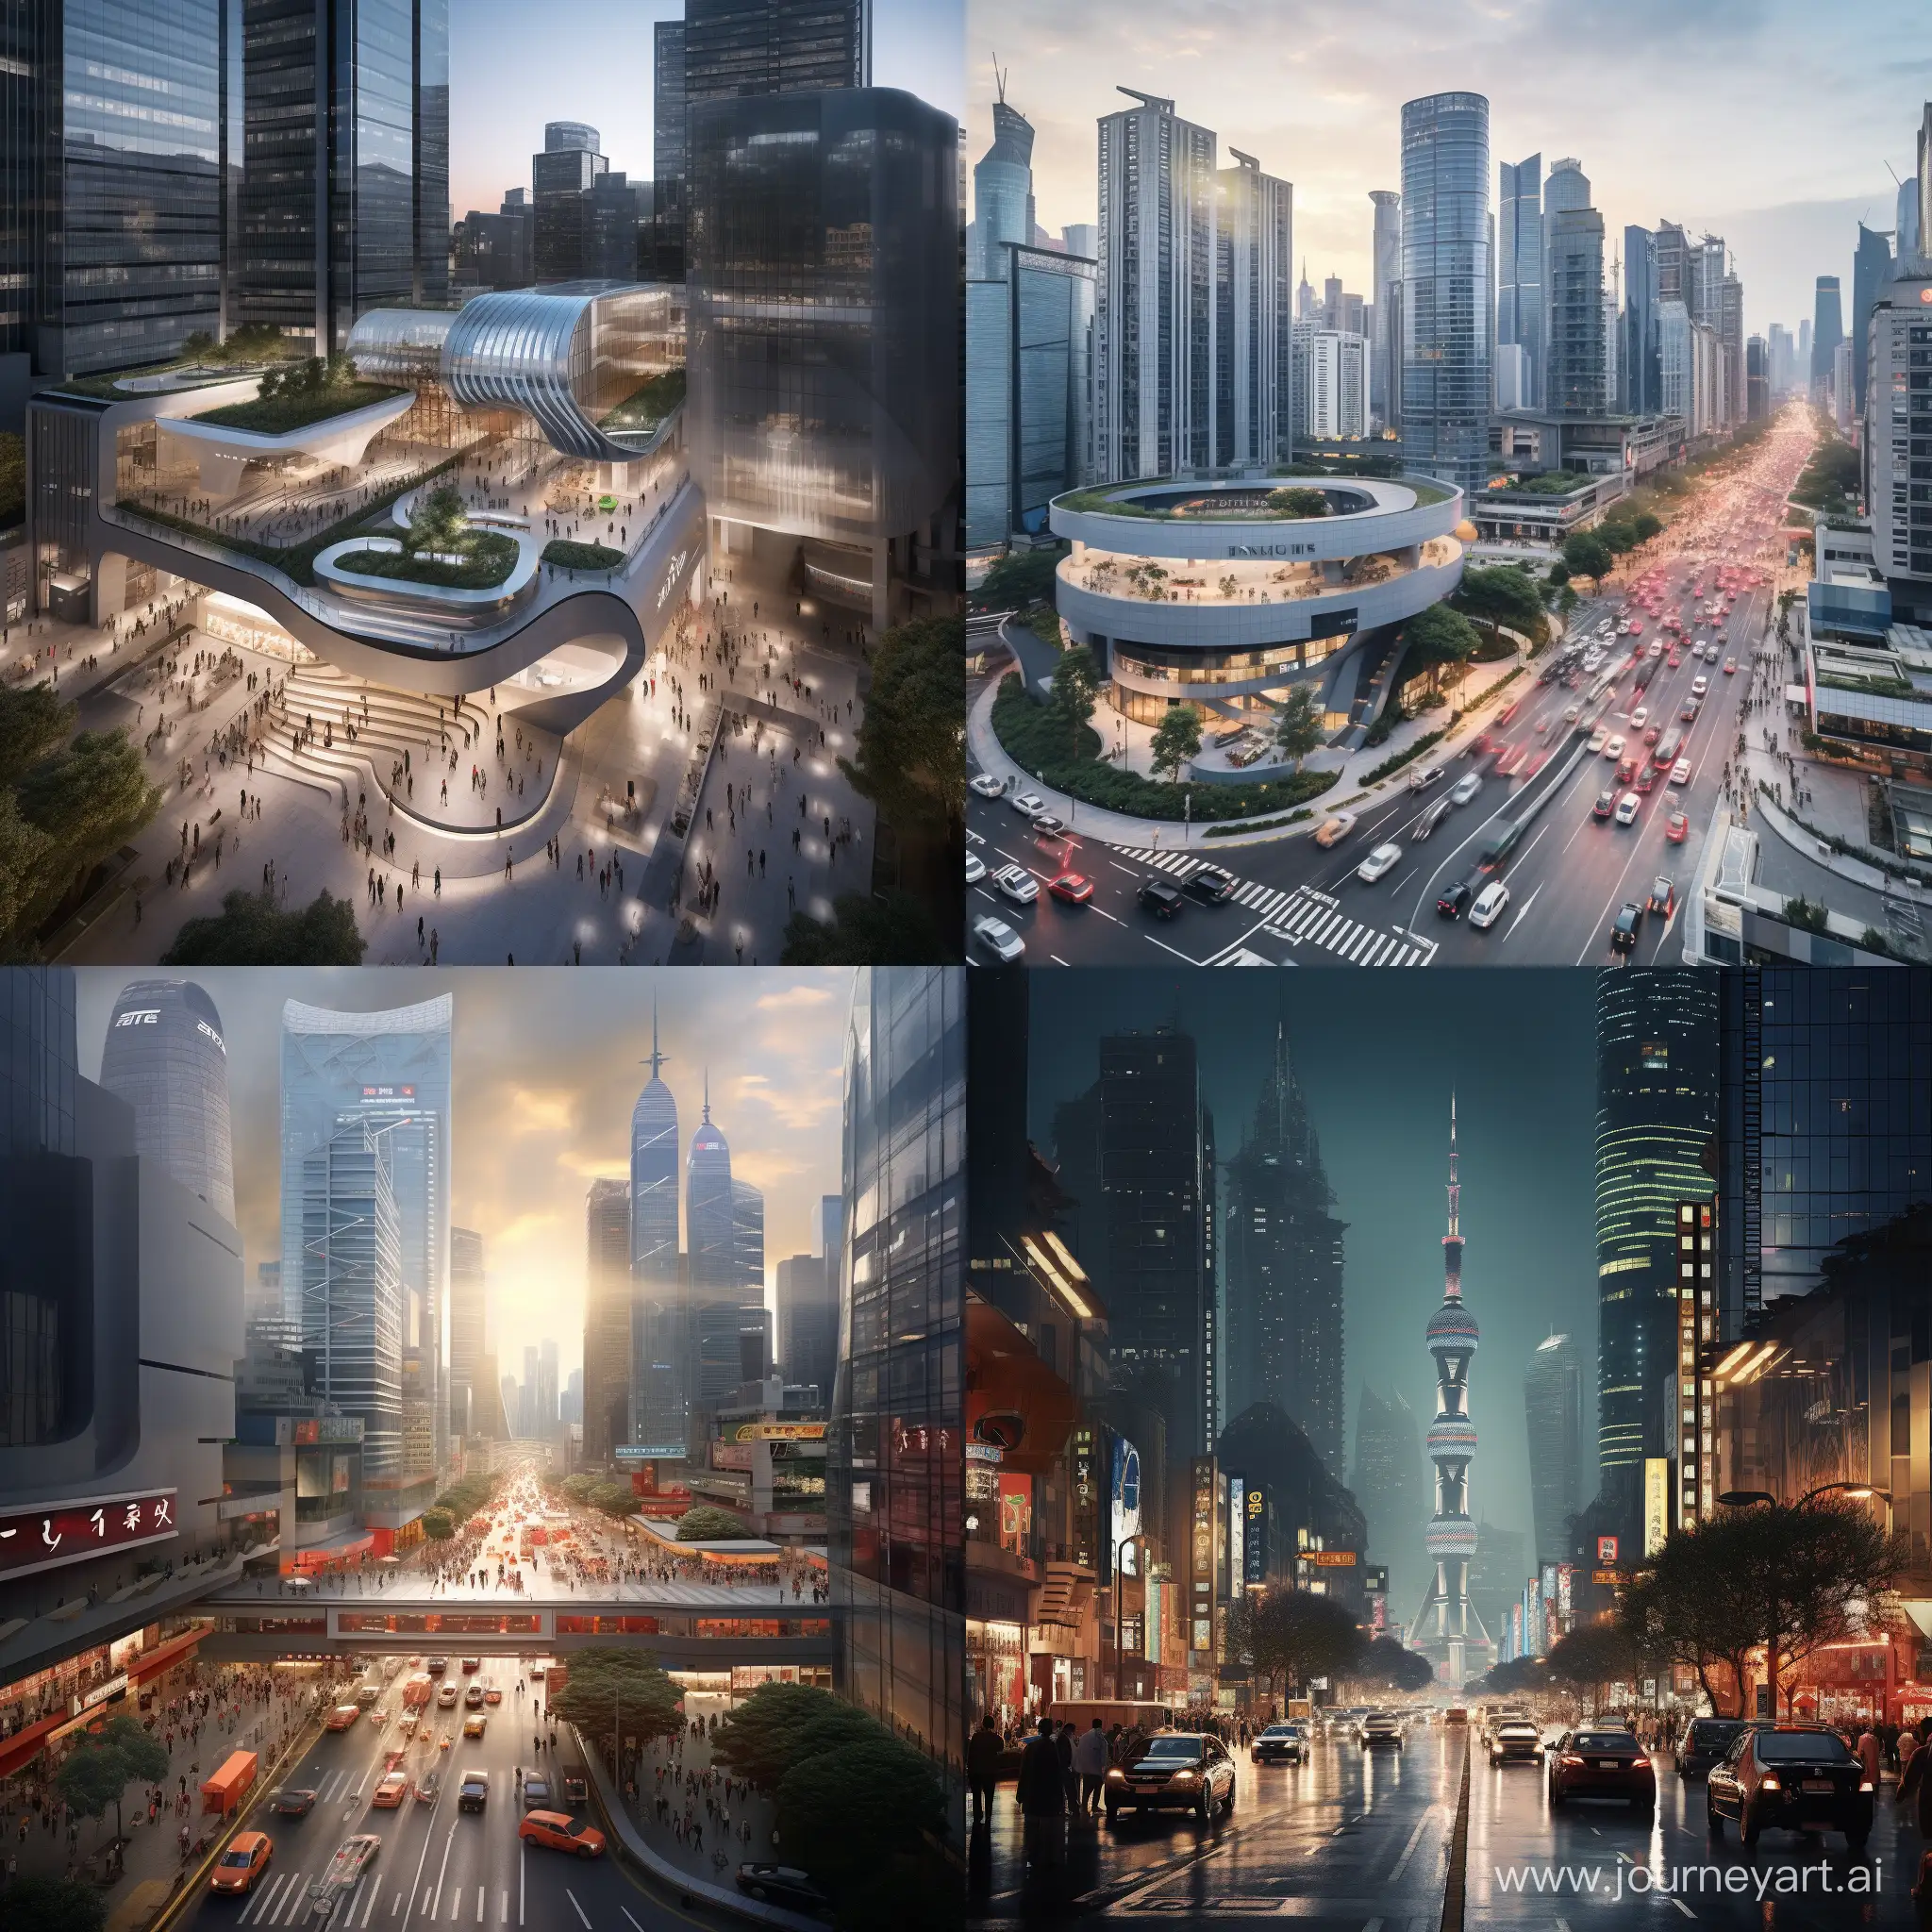 Urban-Reflections-Xujiahui-Center-Architecture-in-a-11-Aspect-Ratio